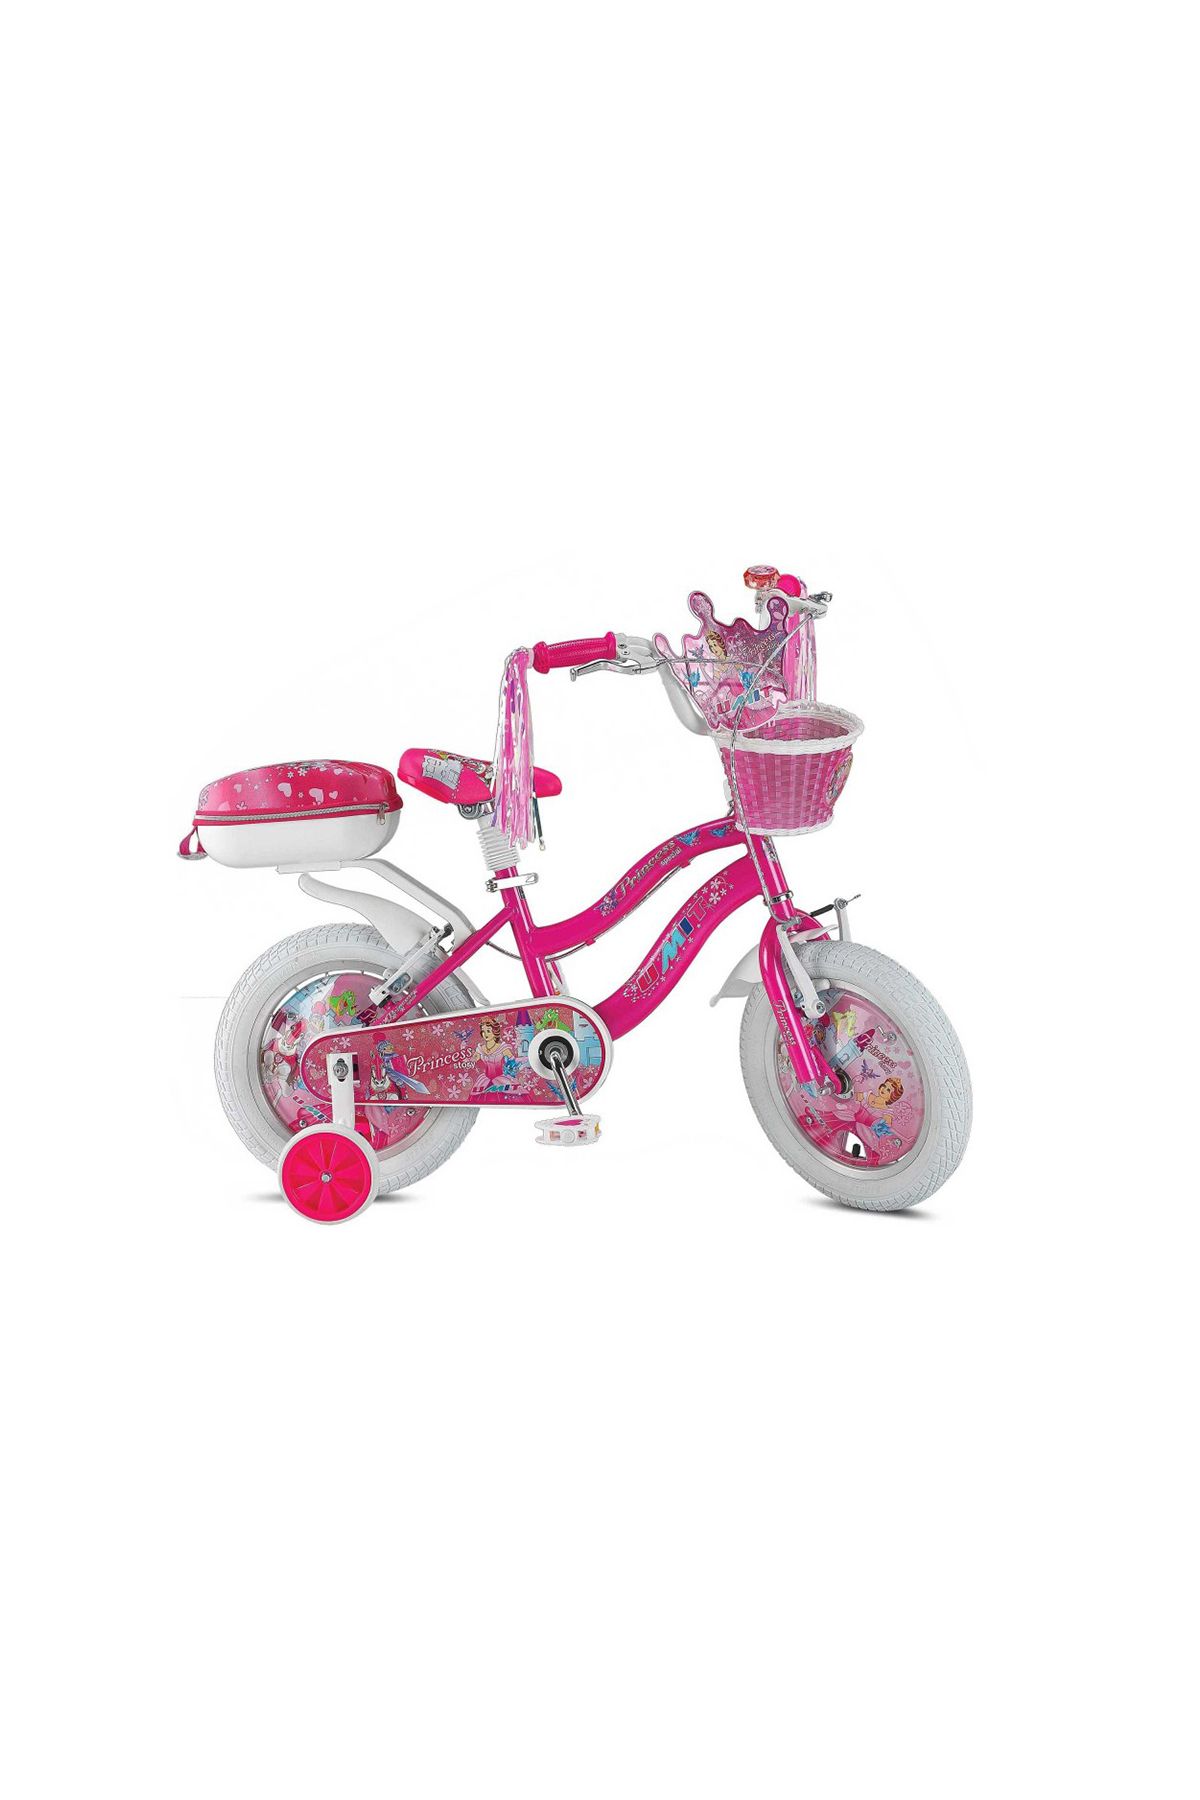 Ümit Bisiklet Ümit Princess - 14 Jant Sepetli Çocuk Bisikleti - Pembe